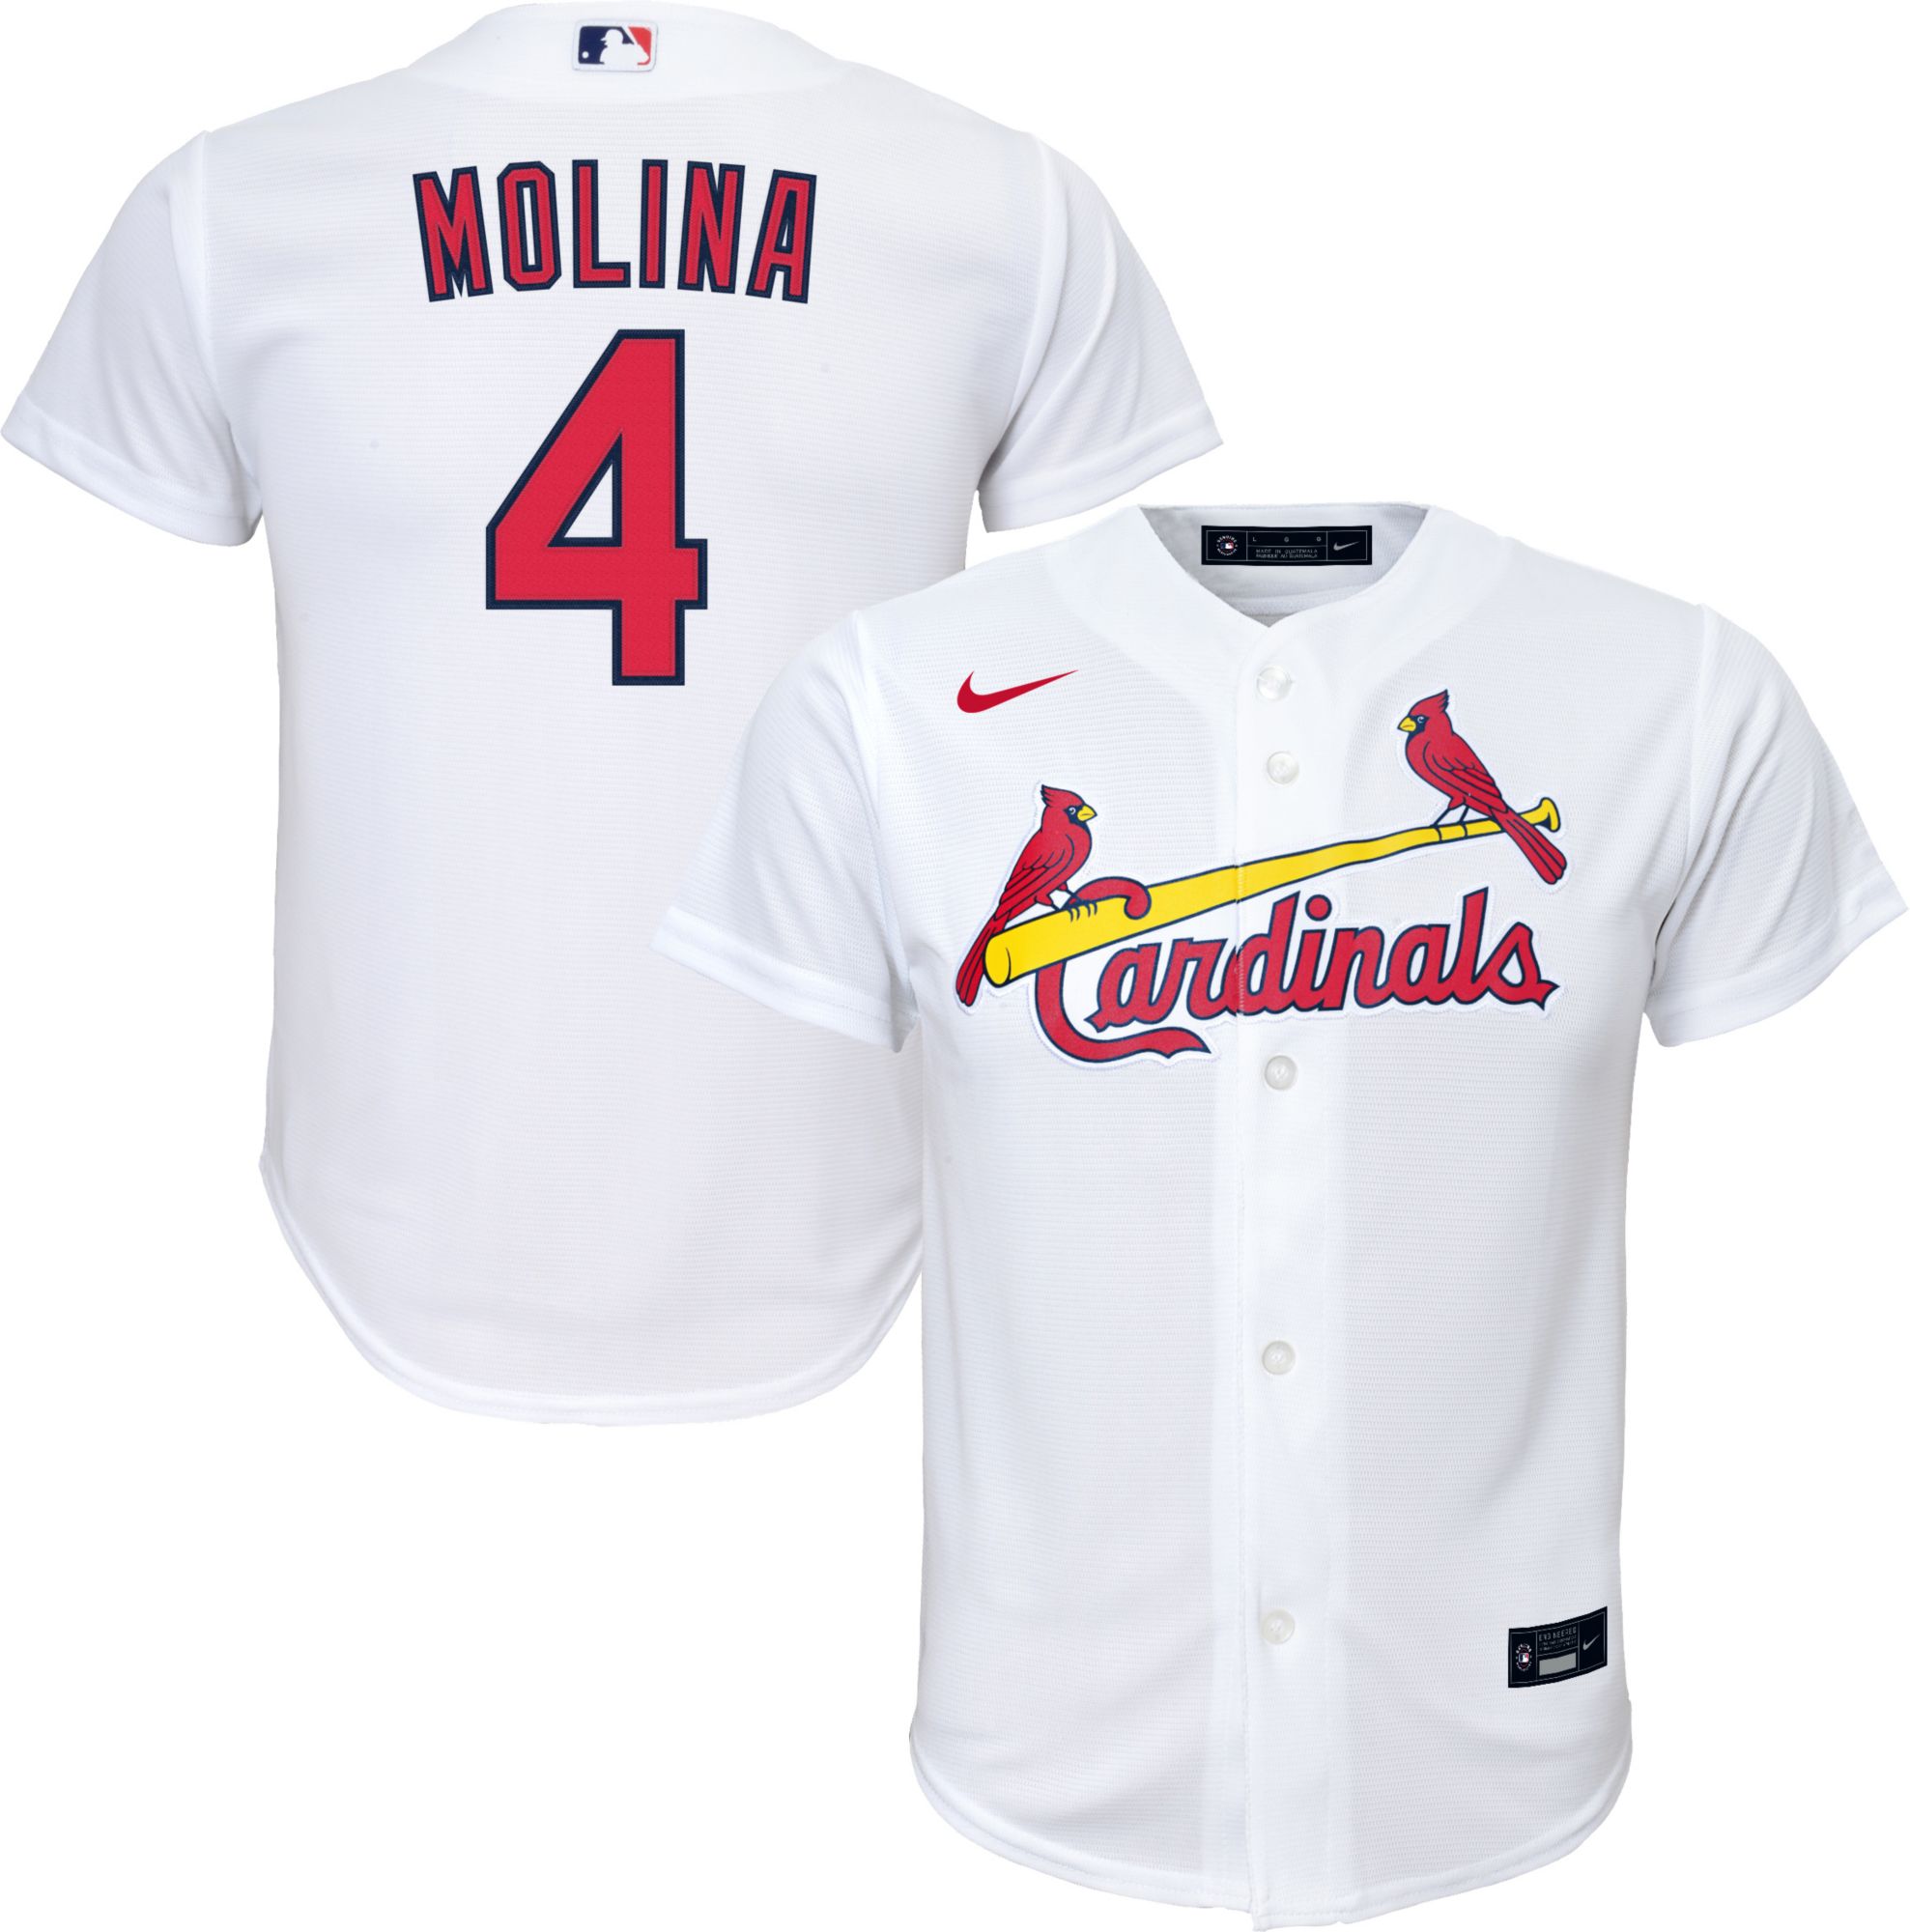 cardinals white jersey